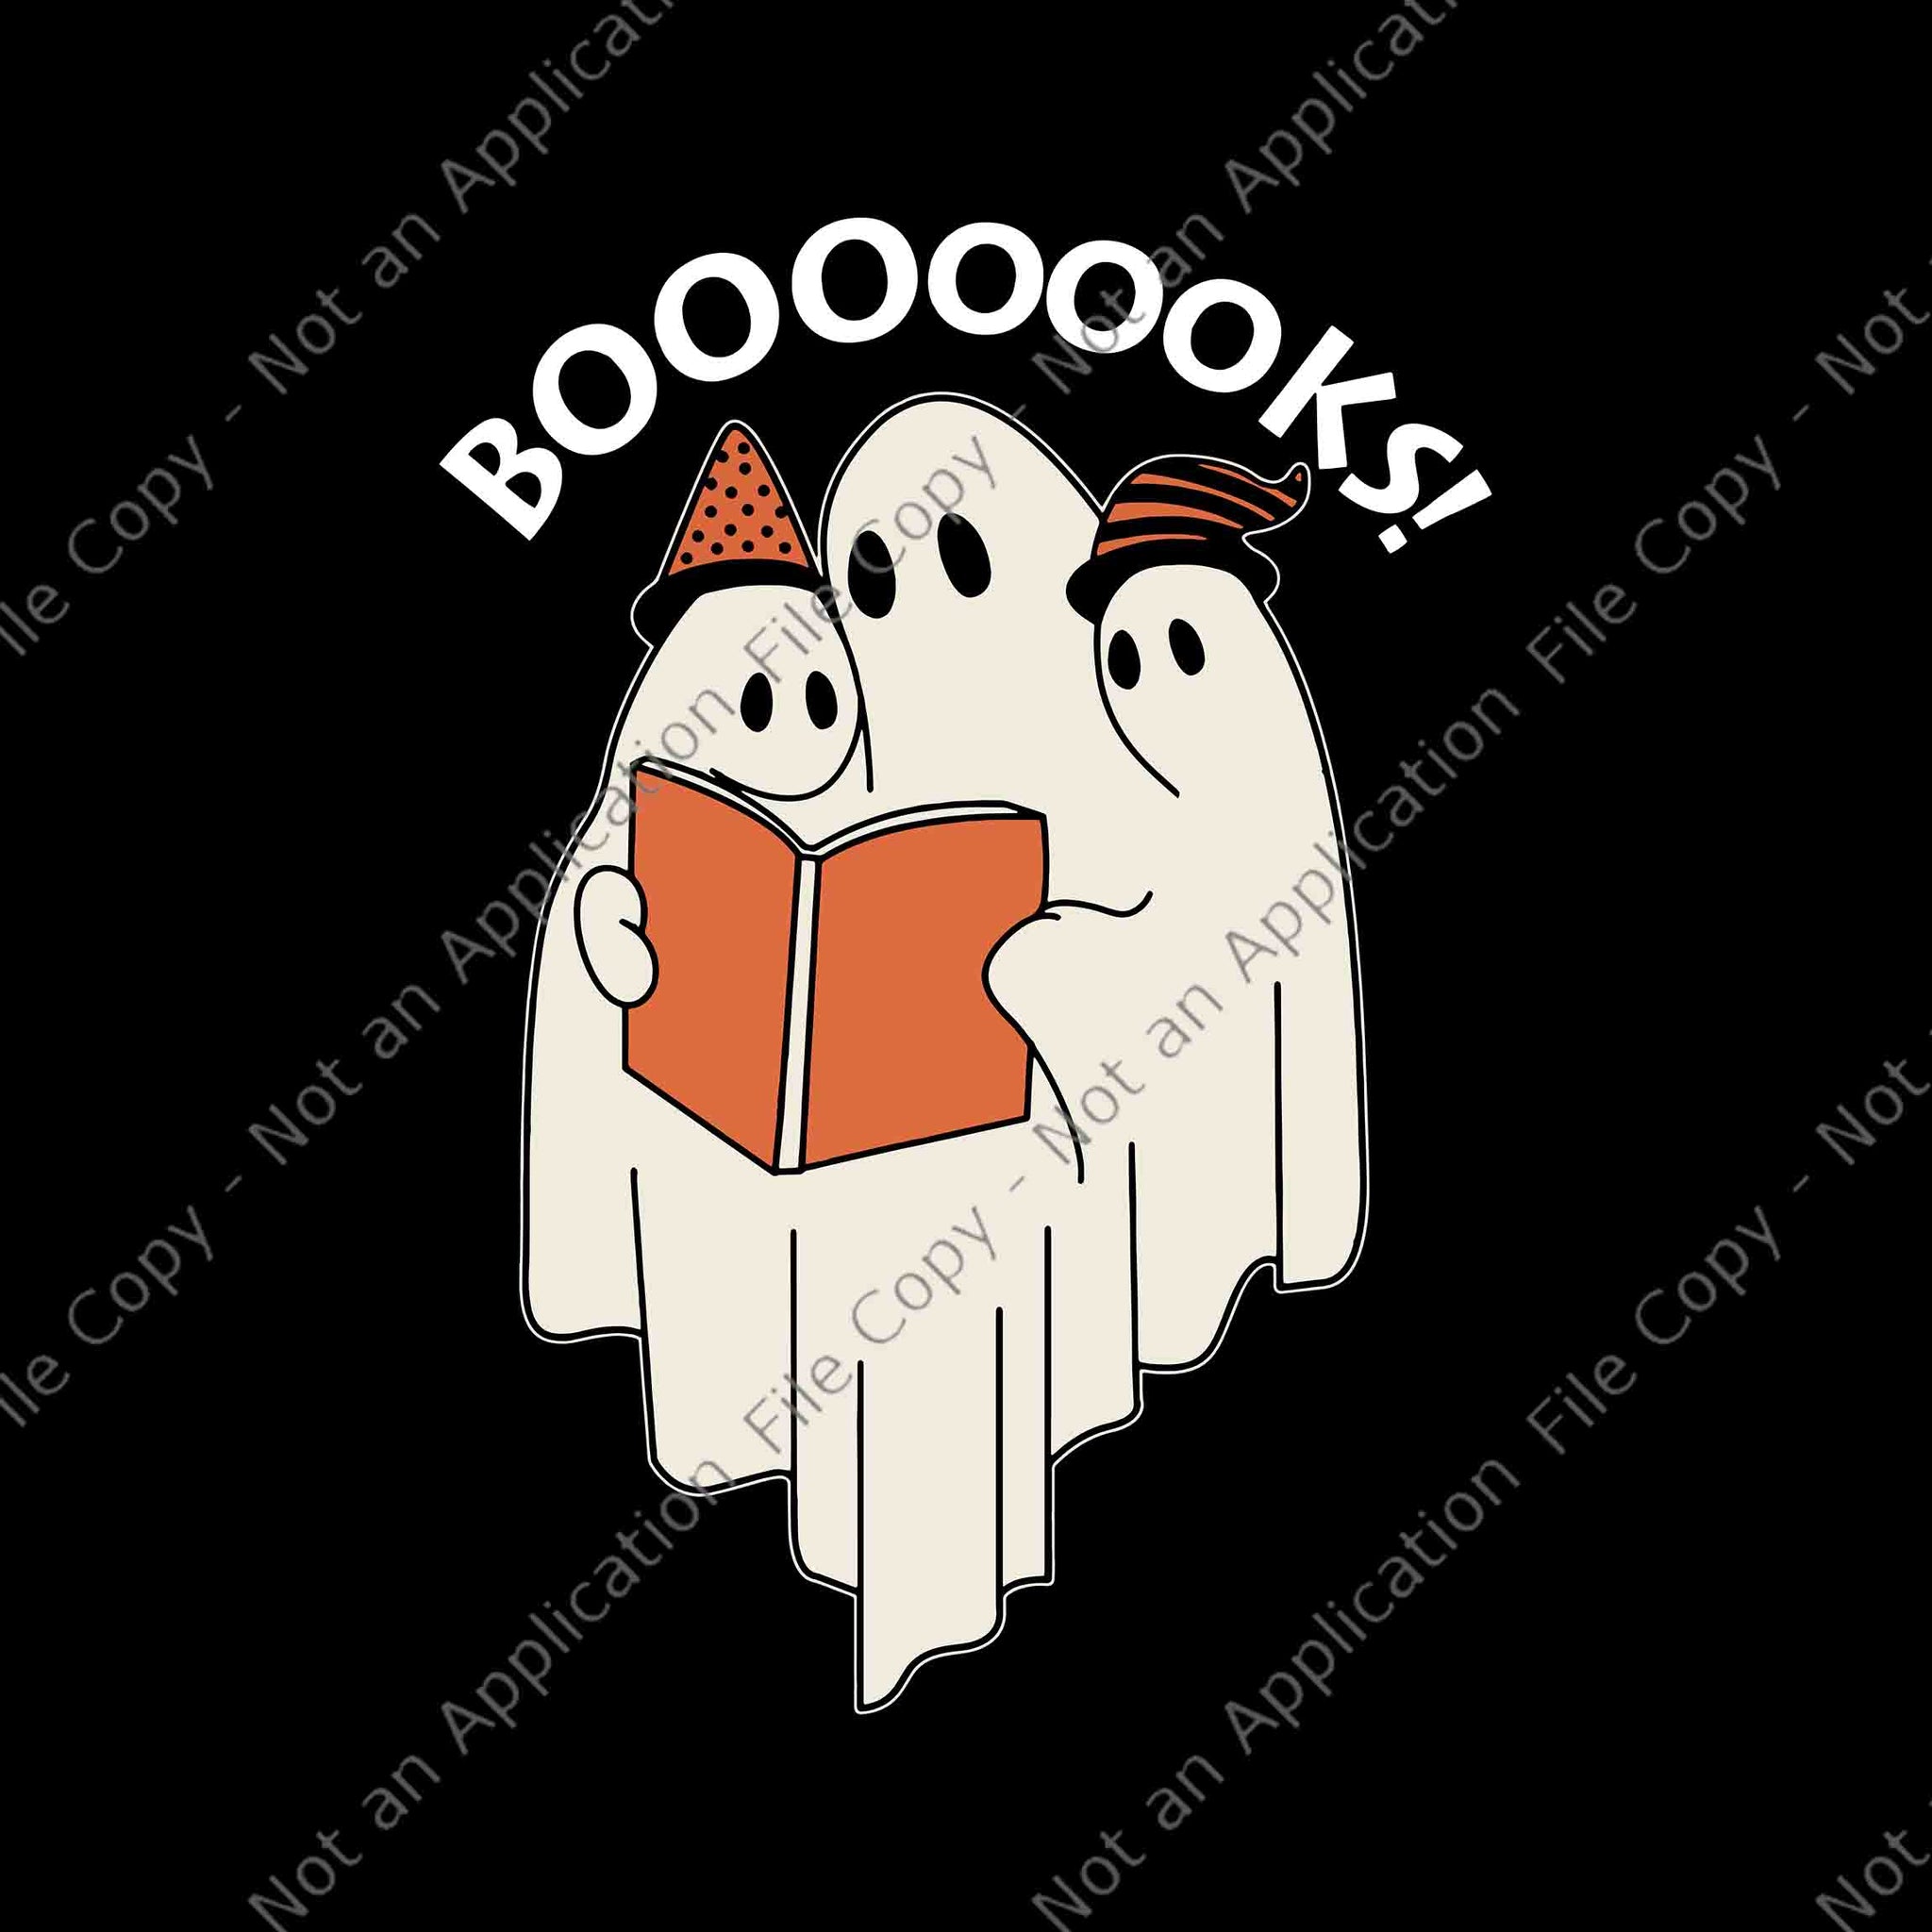 Read More Boooooks SVG Cut File - Buy t-shirt designs